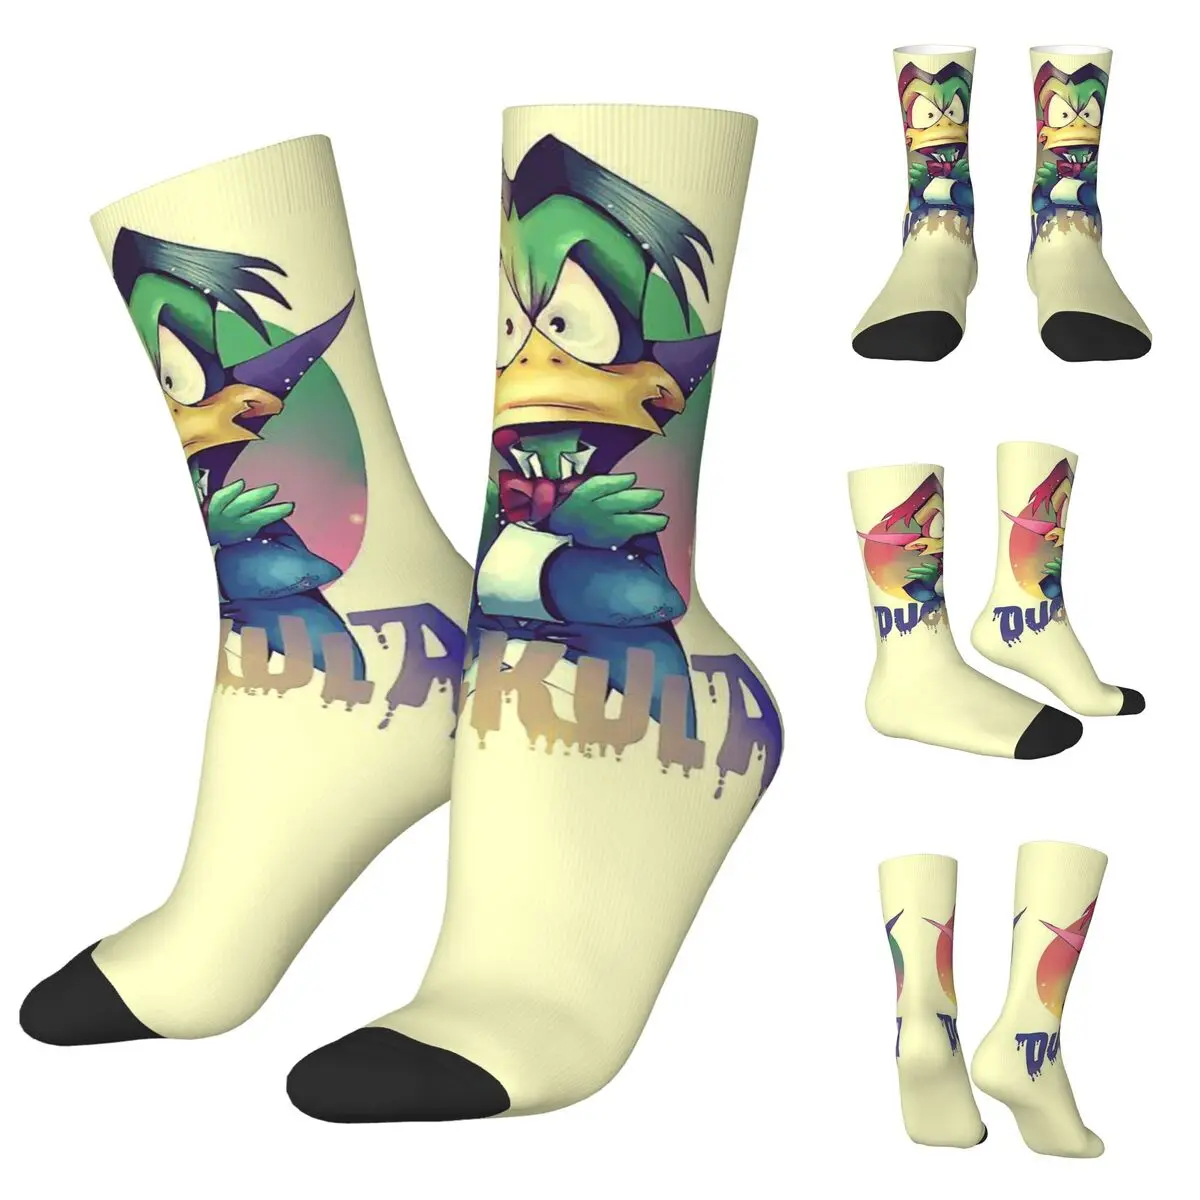 Count Duckula Vampire Lord The Castle Straight cosy Unisex Socks,Running Happy 3D printing Socks,Street Style Crazy Sock